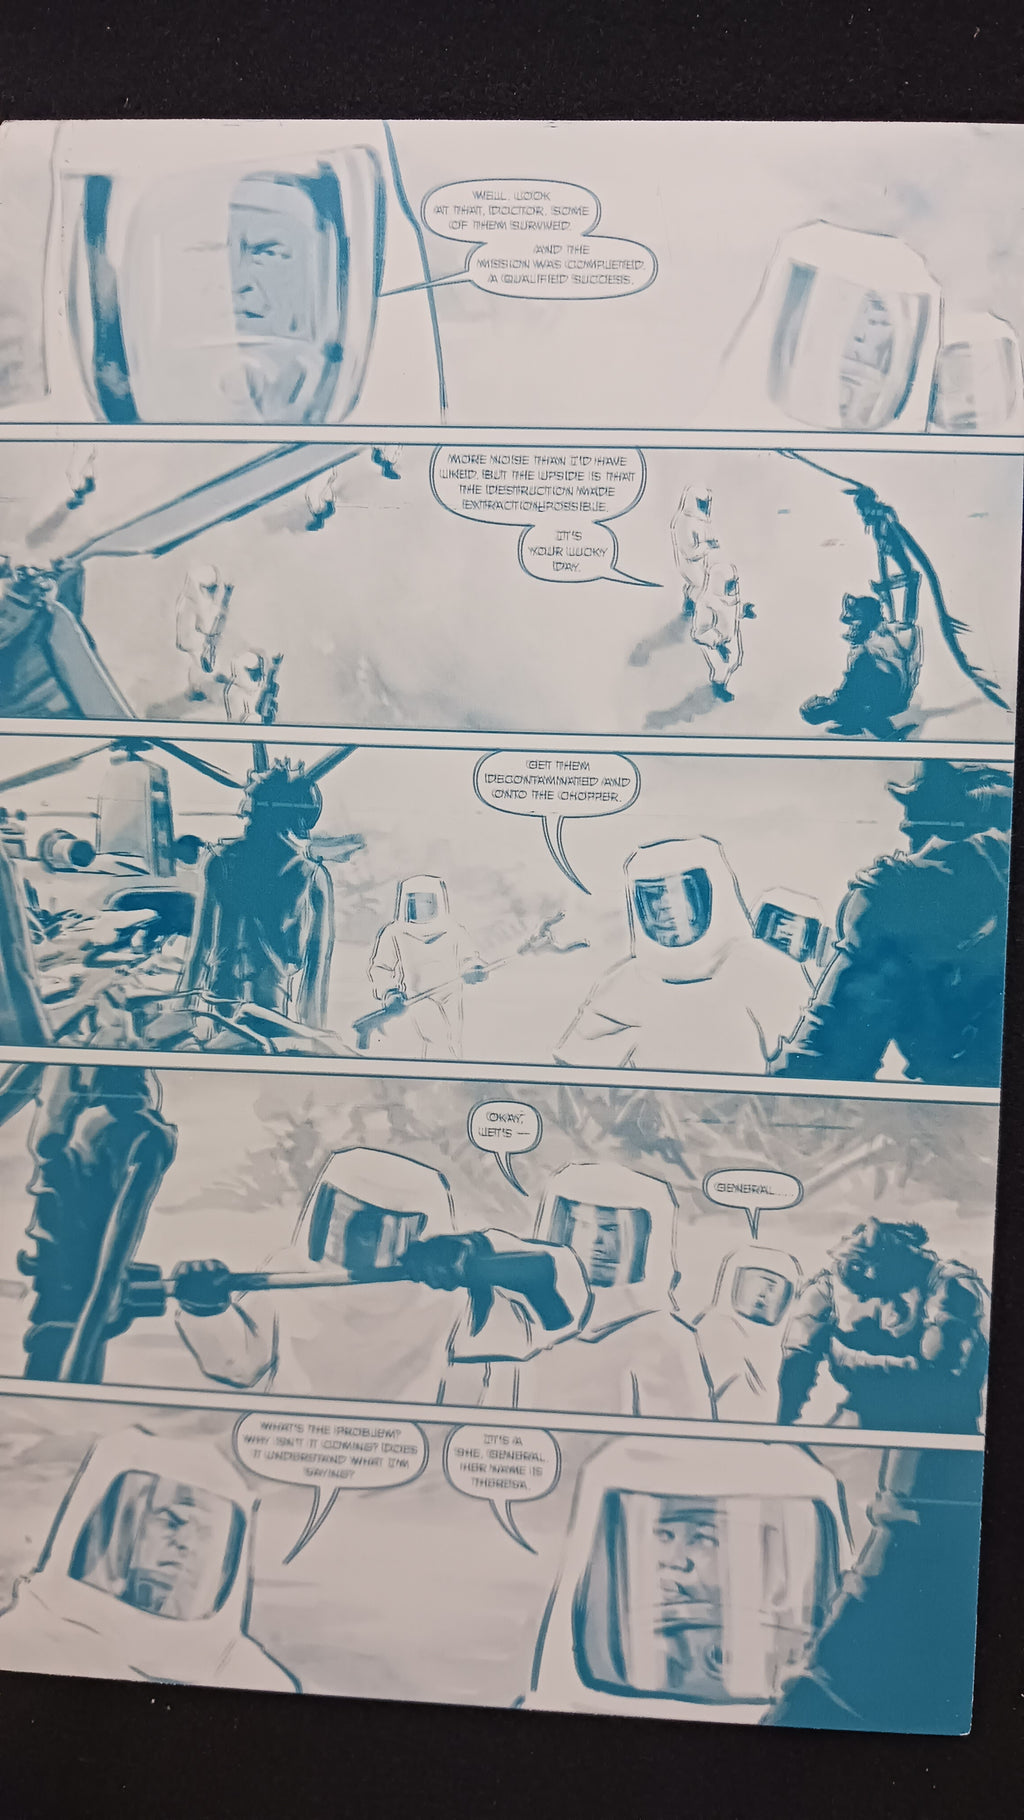 Behemoth #4 - Page 20  - PRESSWORKS - Comic Art - Printer Plate - Cyan